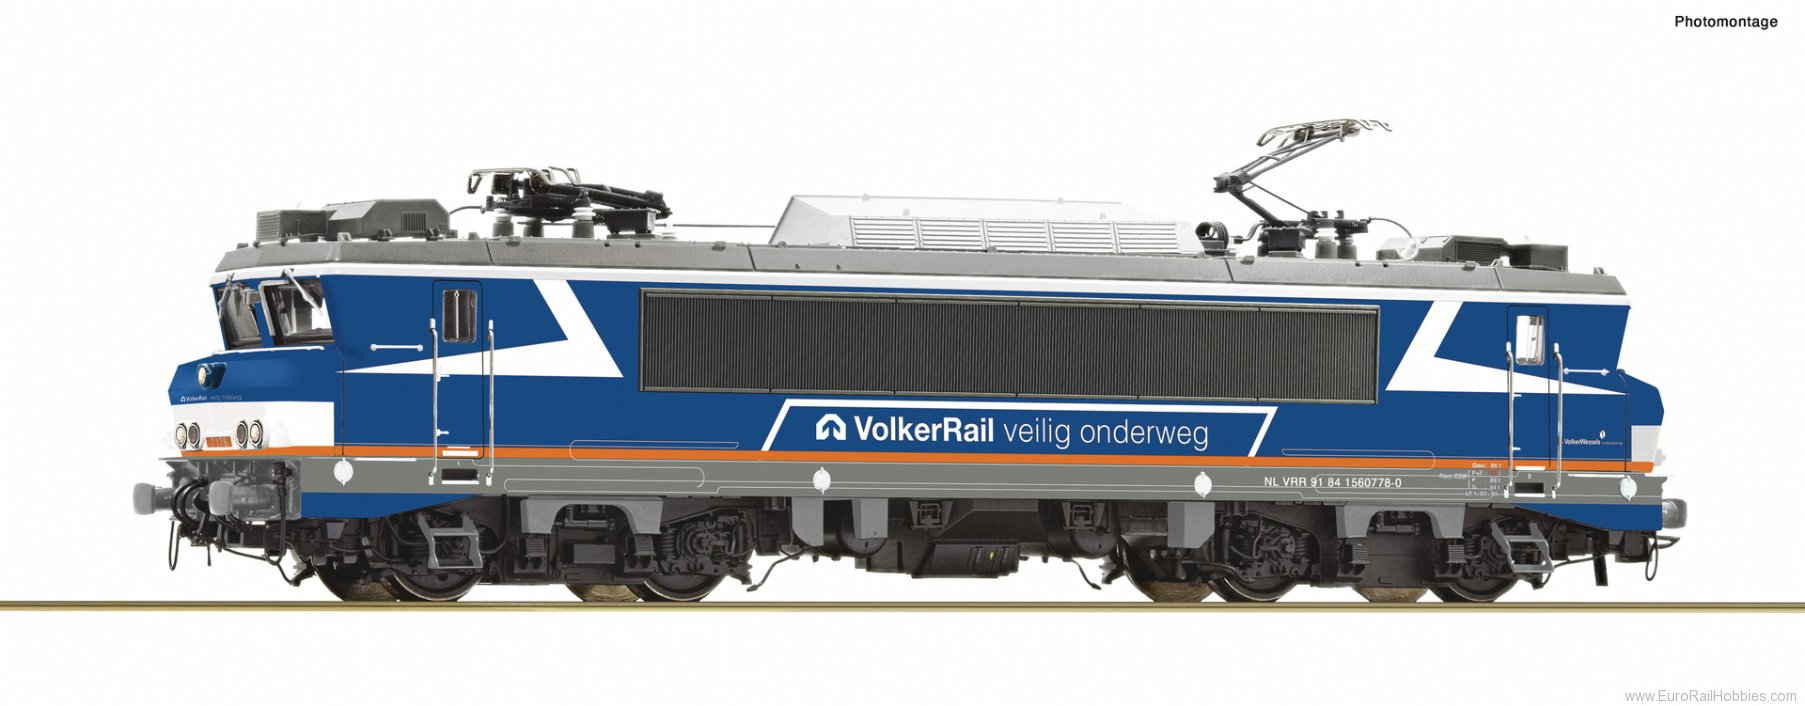 Roco 7520010 Electric locomotive 7178, VolkerRail (AC Digi